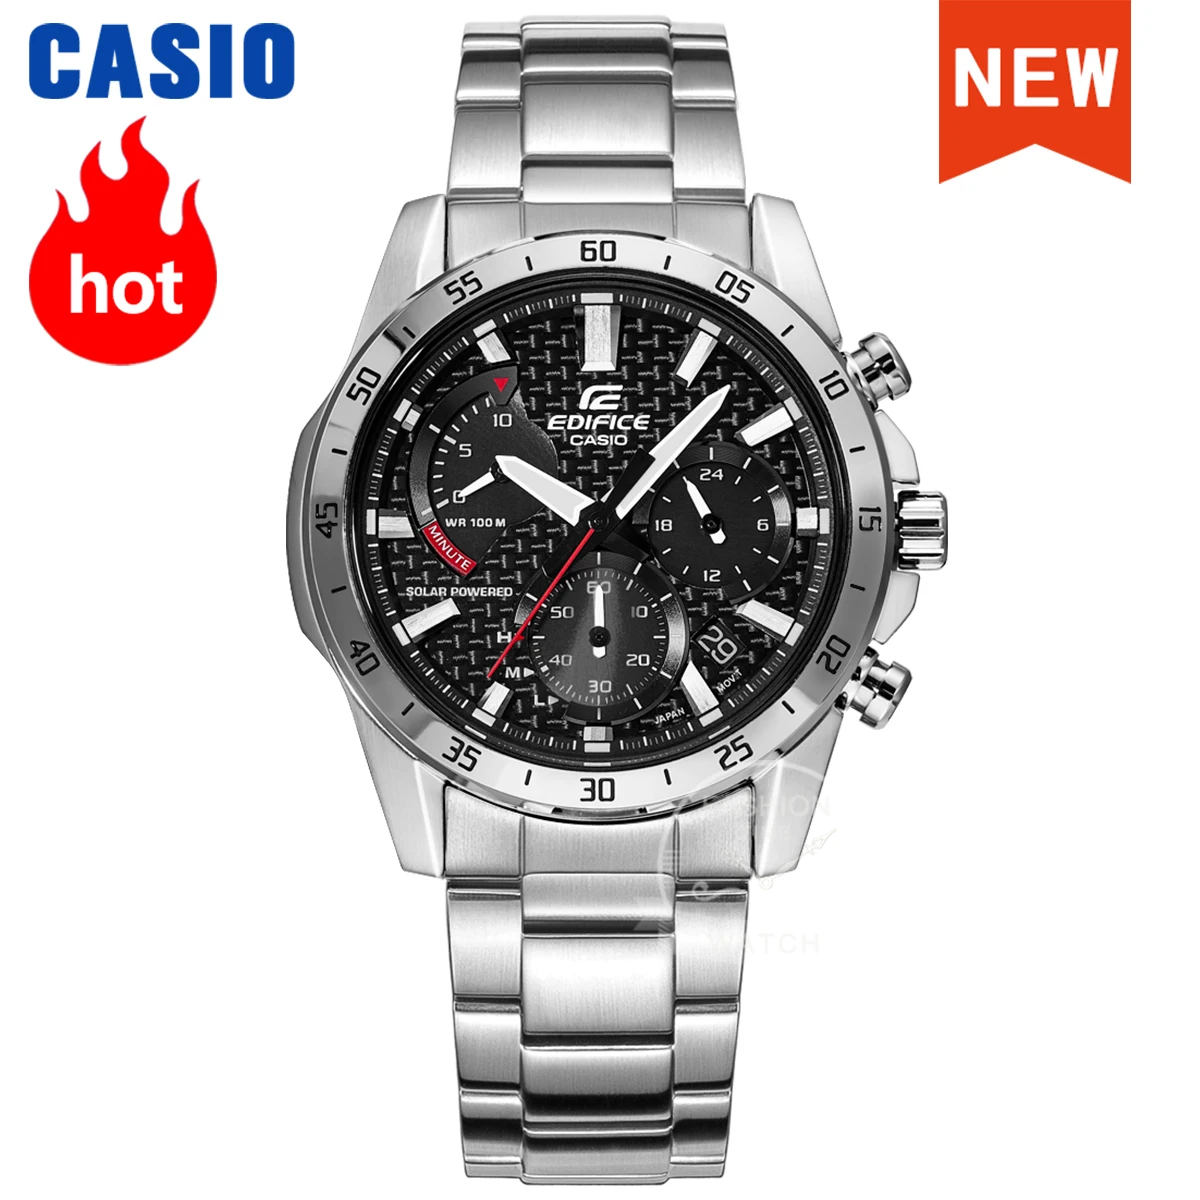 

Casio Edifice Series Brand Luxury Quartz Waterproof Chronograph Sport Soldier Watch EQS-930D-1A